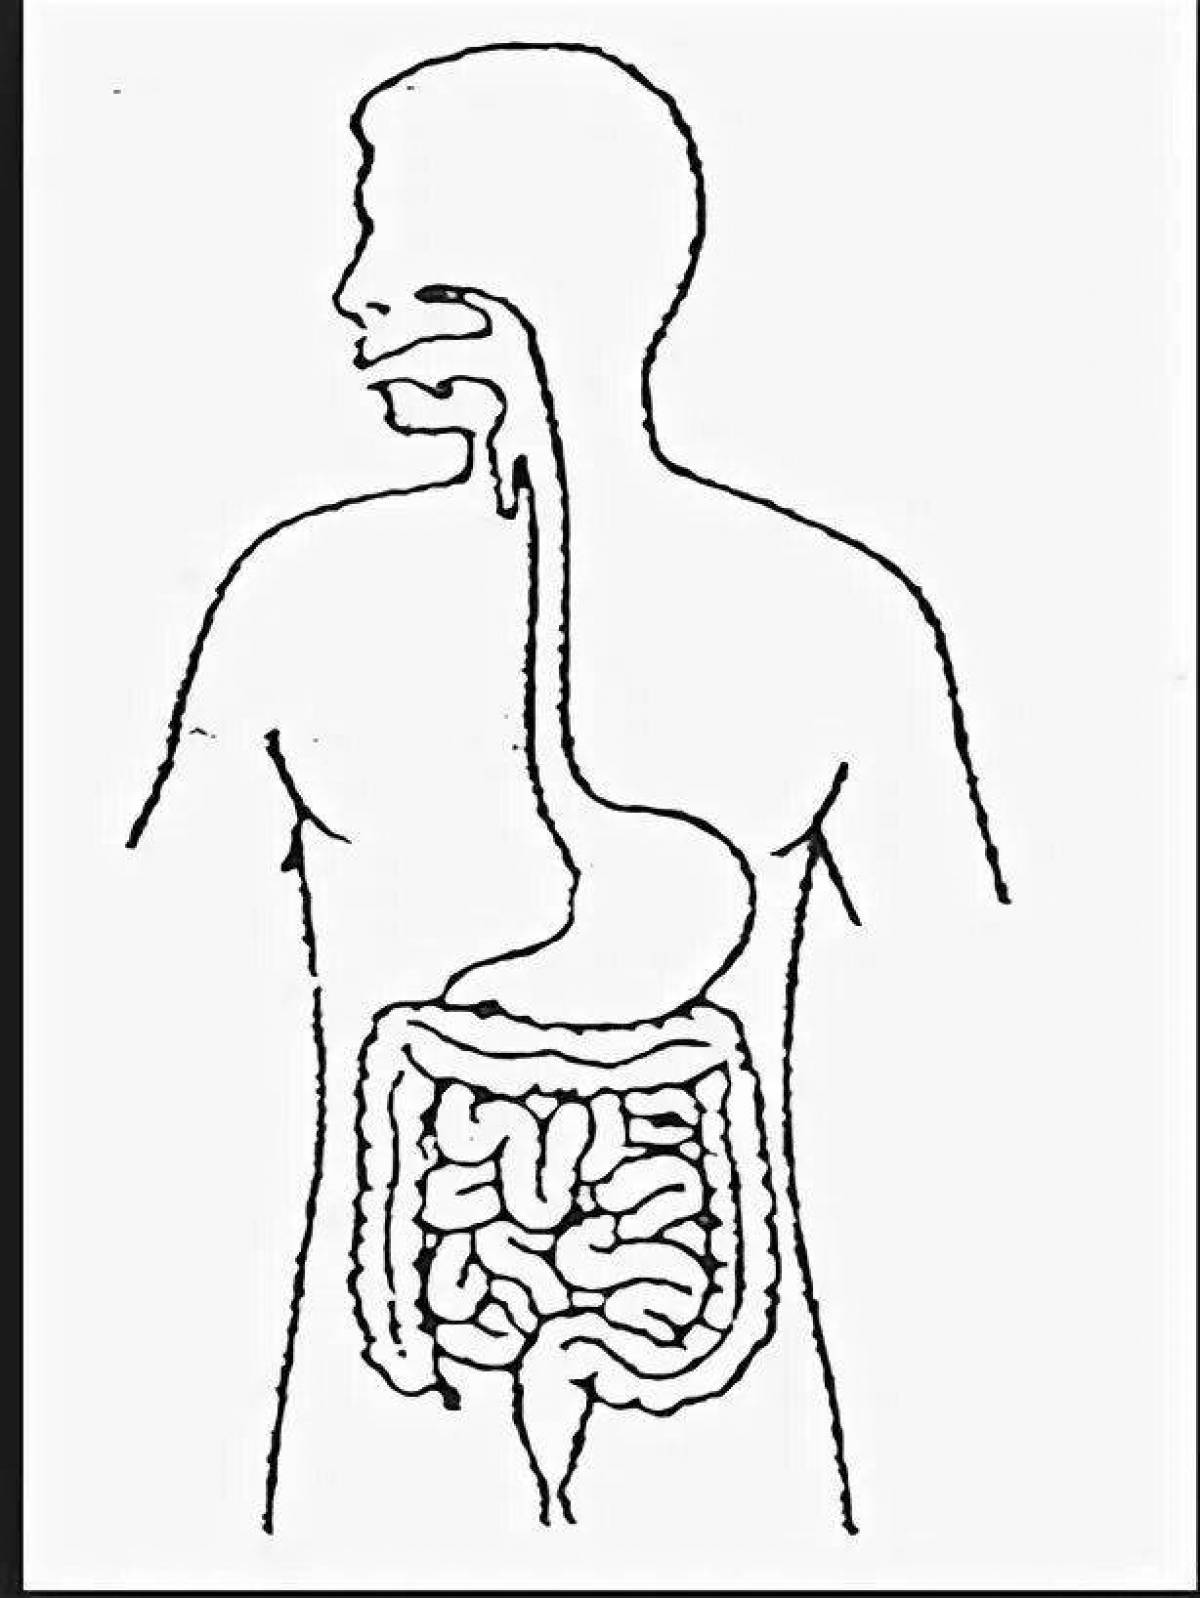 Human digestive system #2